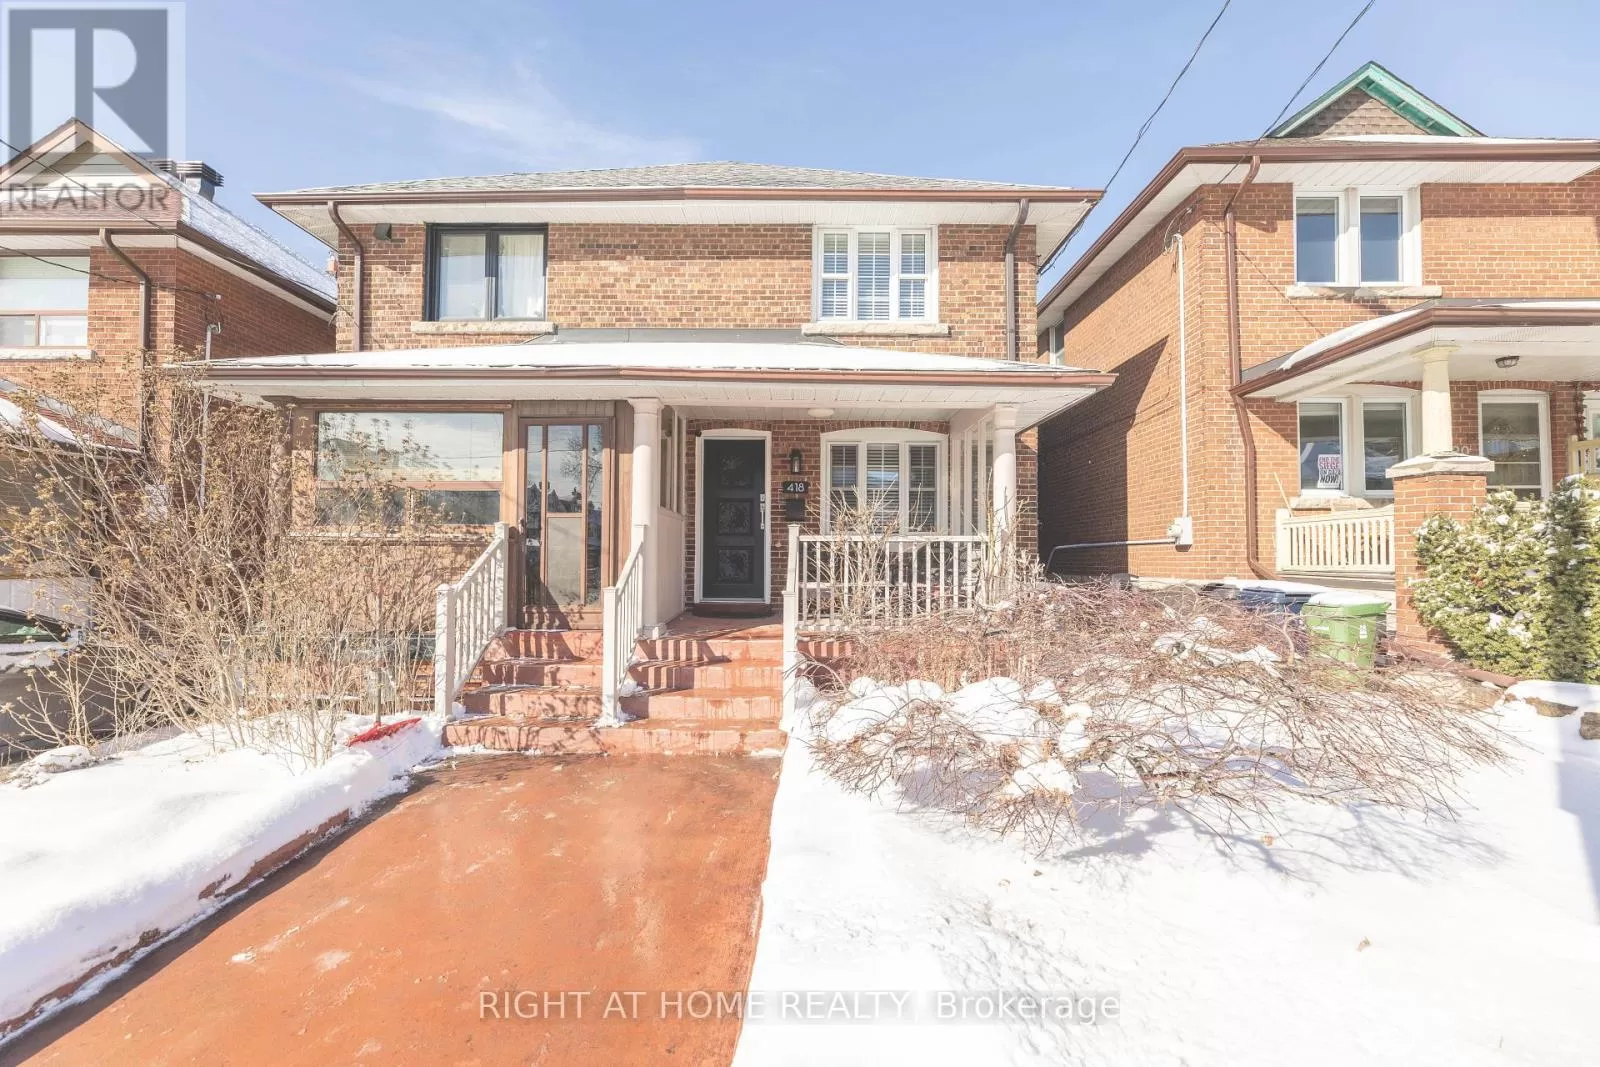 House for rent: 418 Christie Street, Toronto, Ontario M6G 3C6